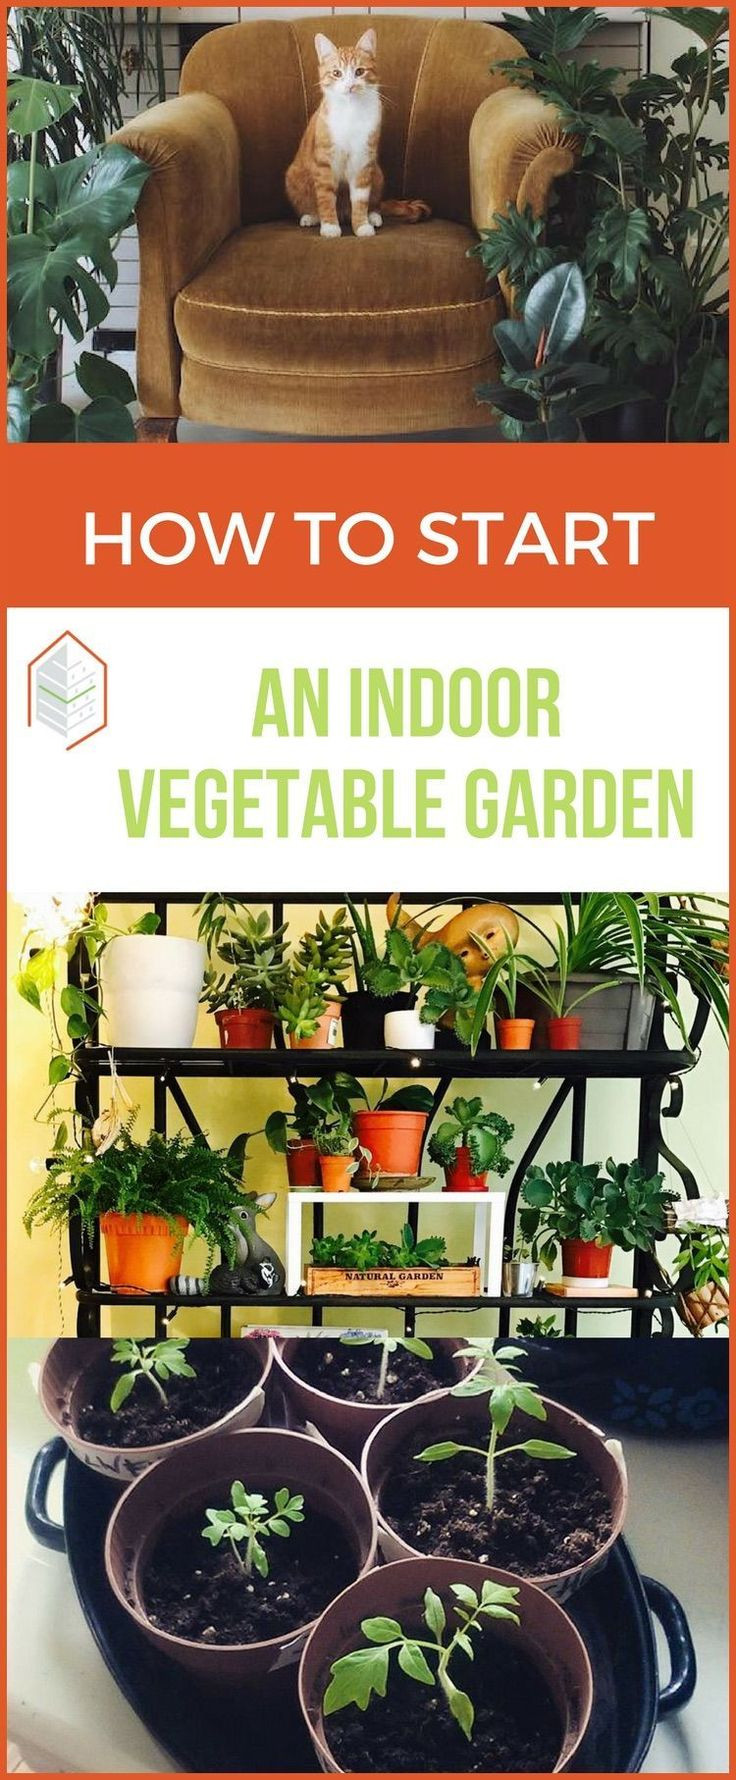 Best ideas about Indoor Vegetable Garden Ideas
. Save or Pin Best 25 Indoor ve able gardening ideas on Pinterest Now.